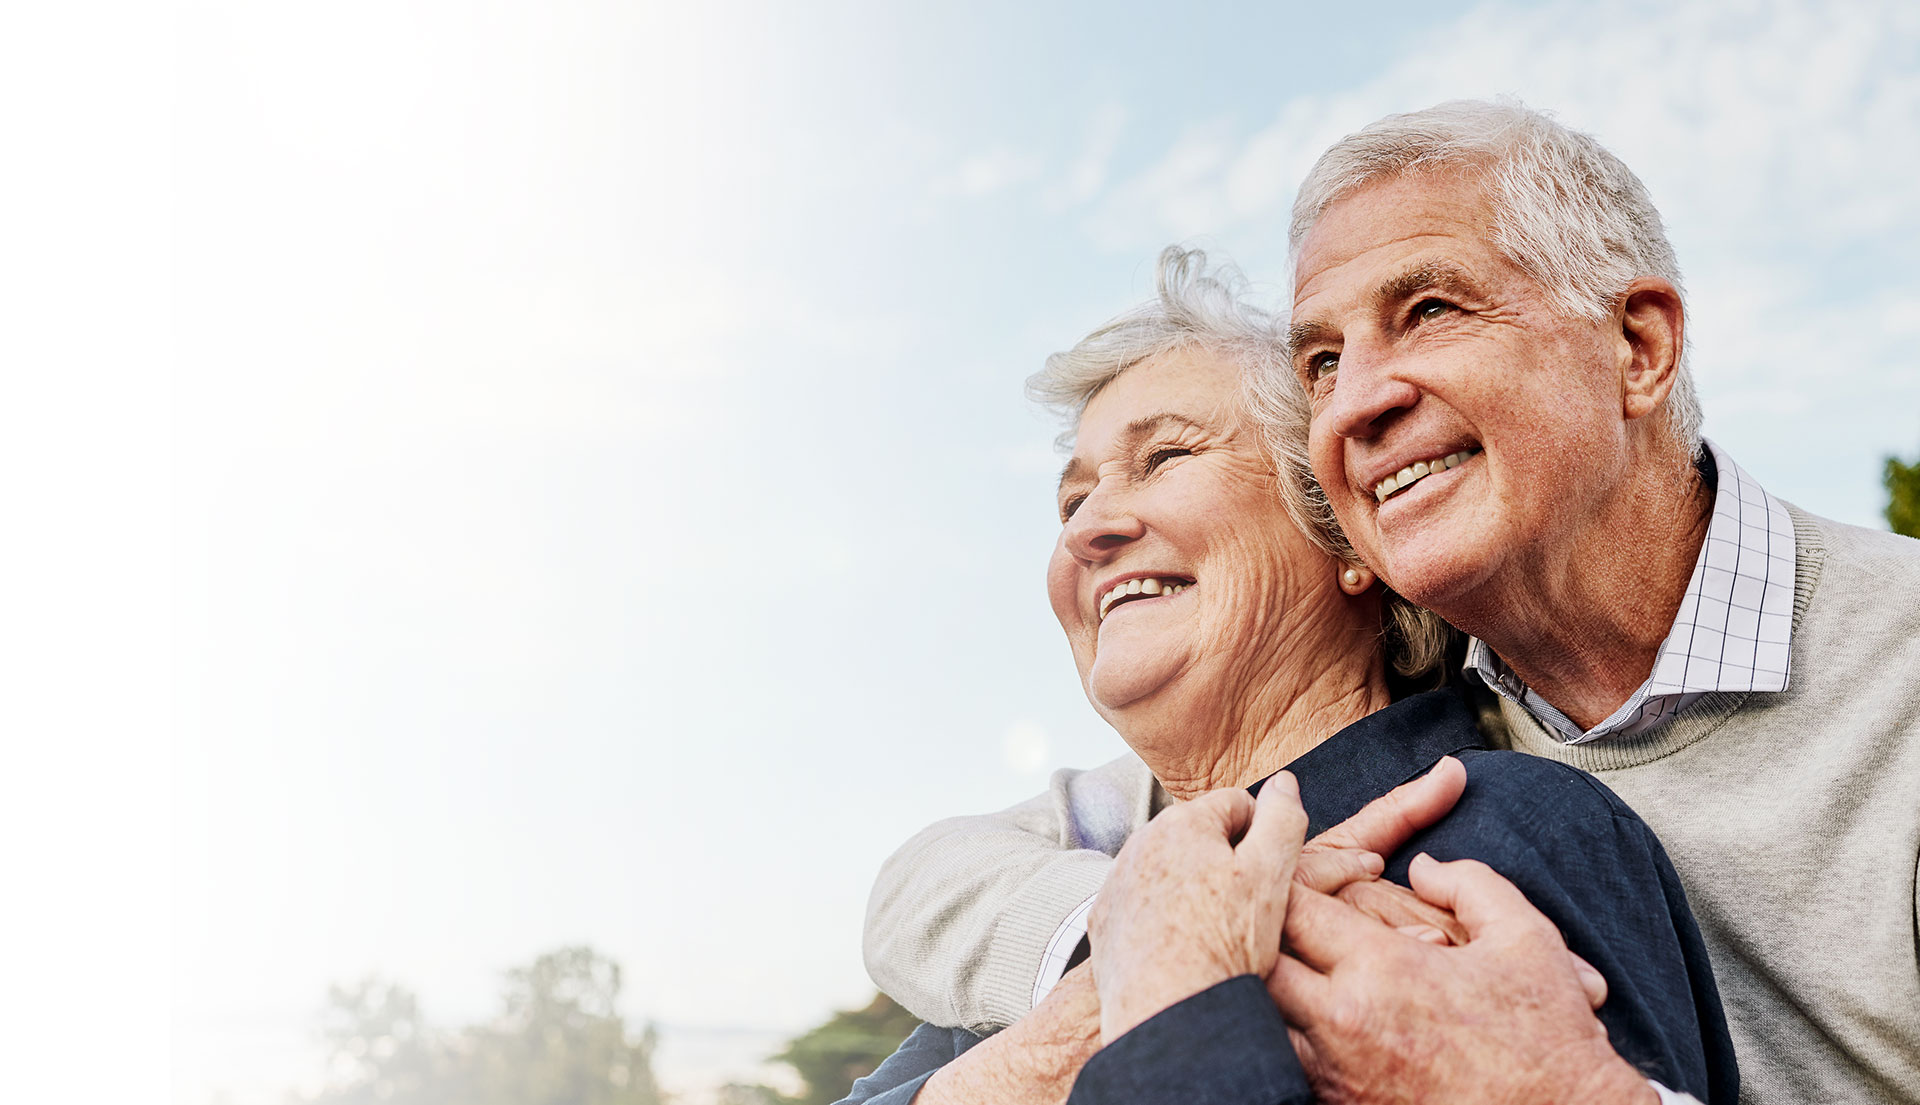 Smiling senior couple embracing outdoors at a senior living community.